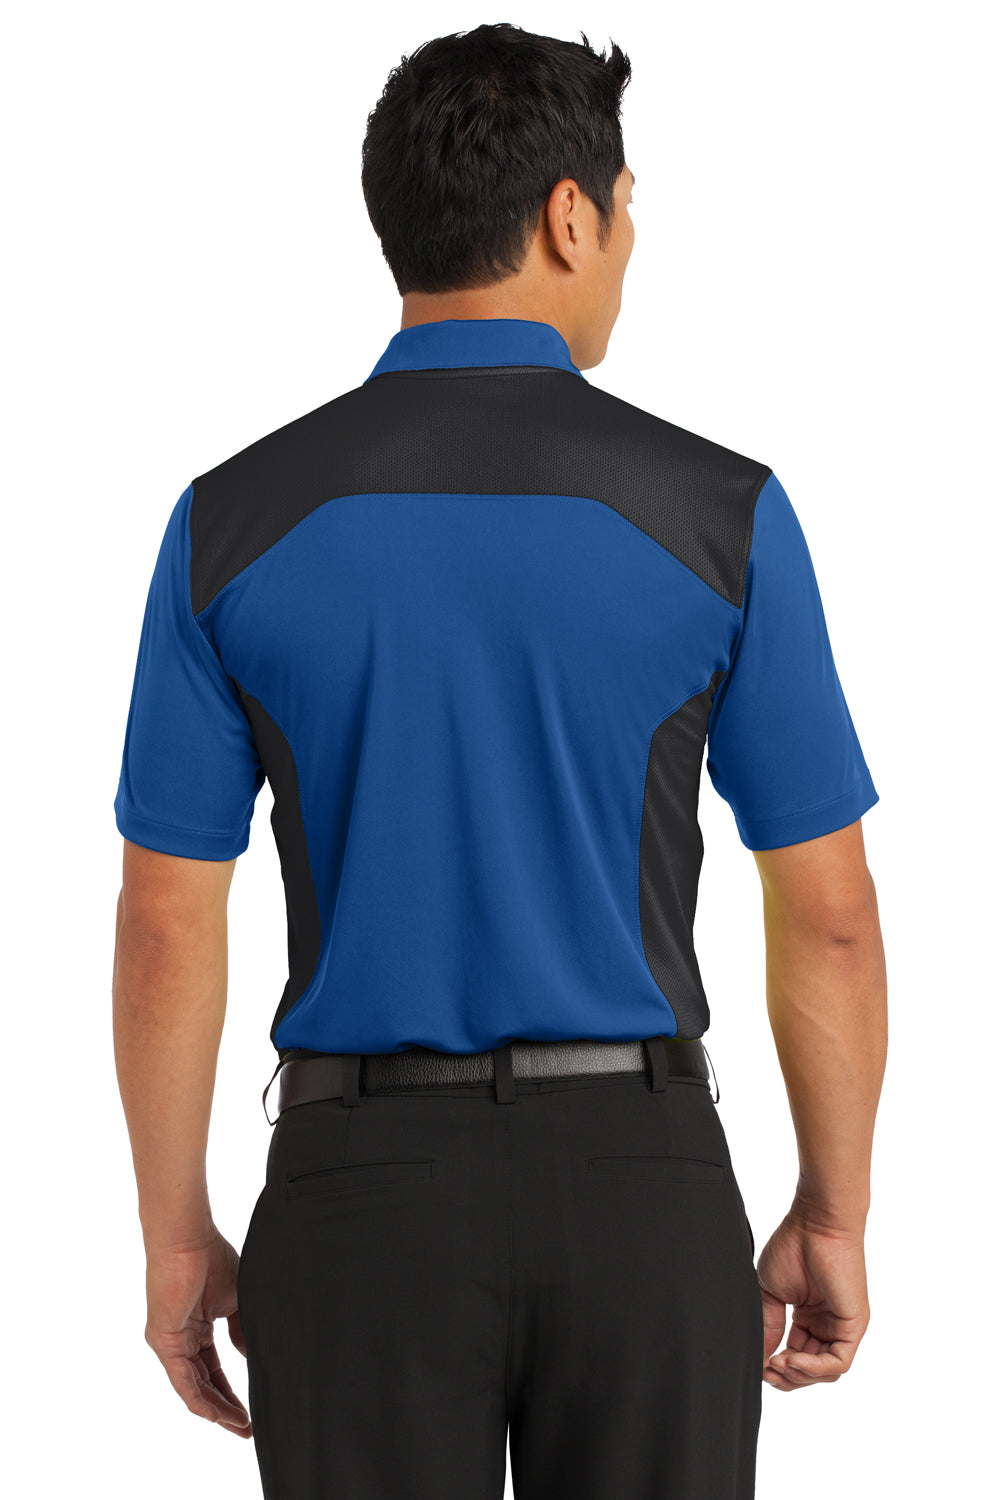 Nike 632418 Mens Dri-Fit Moisture Wicking Short Sleeve Polo Shirt Royal Blue/Black Back